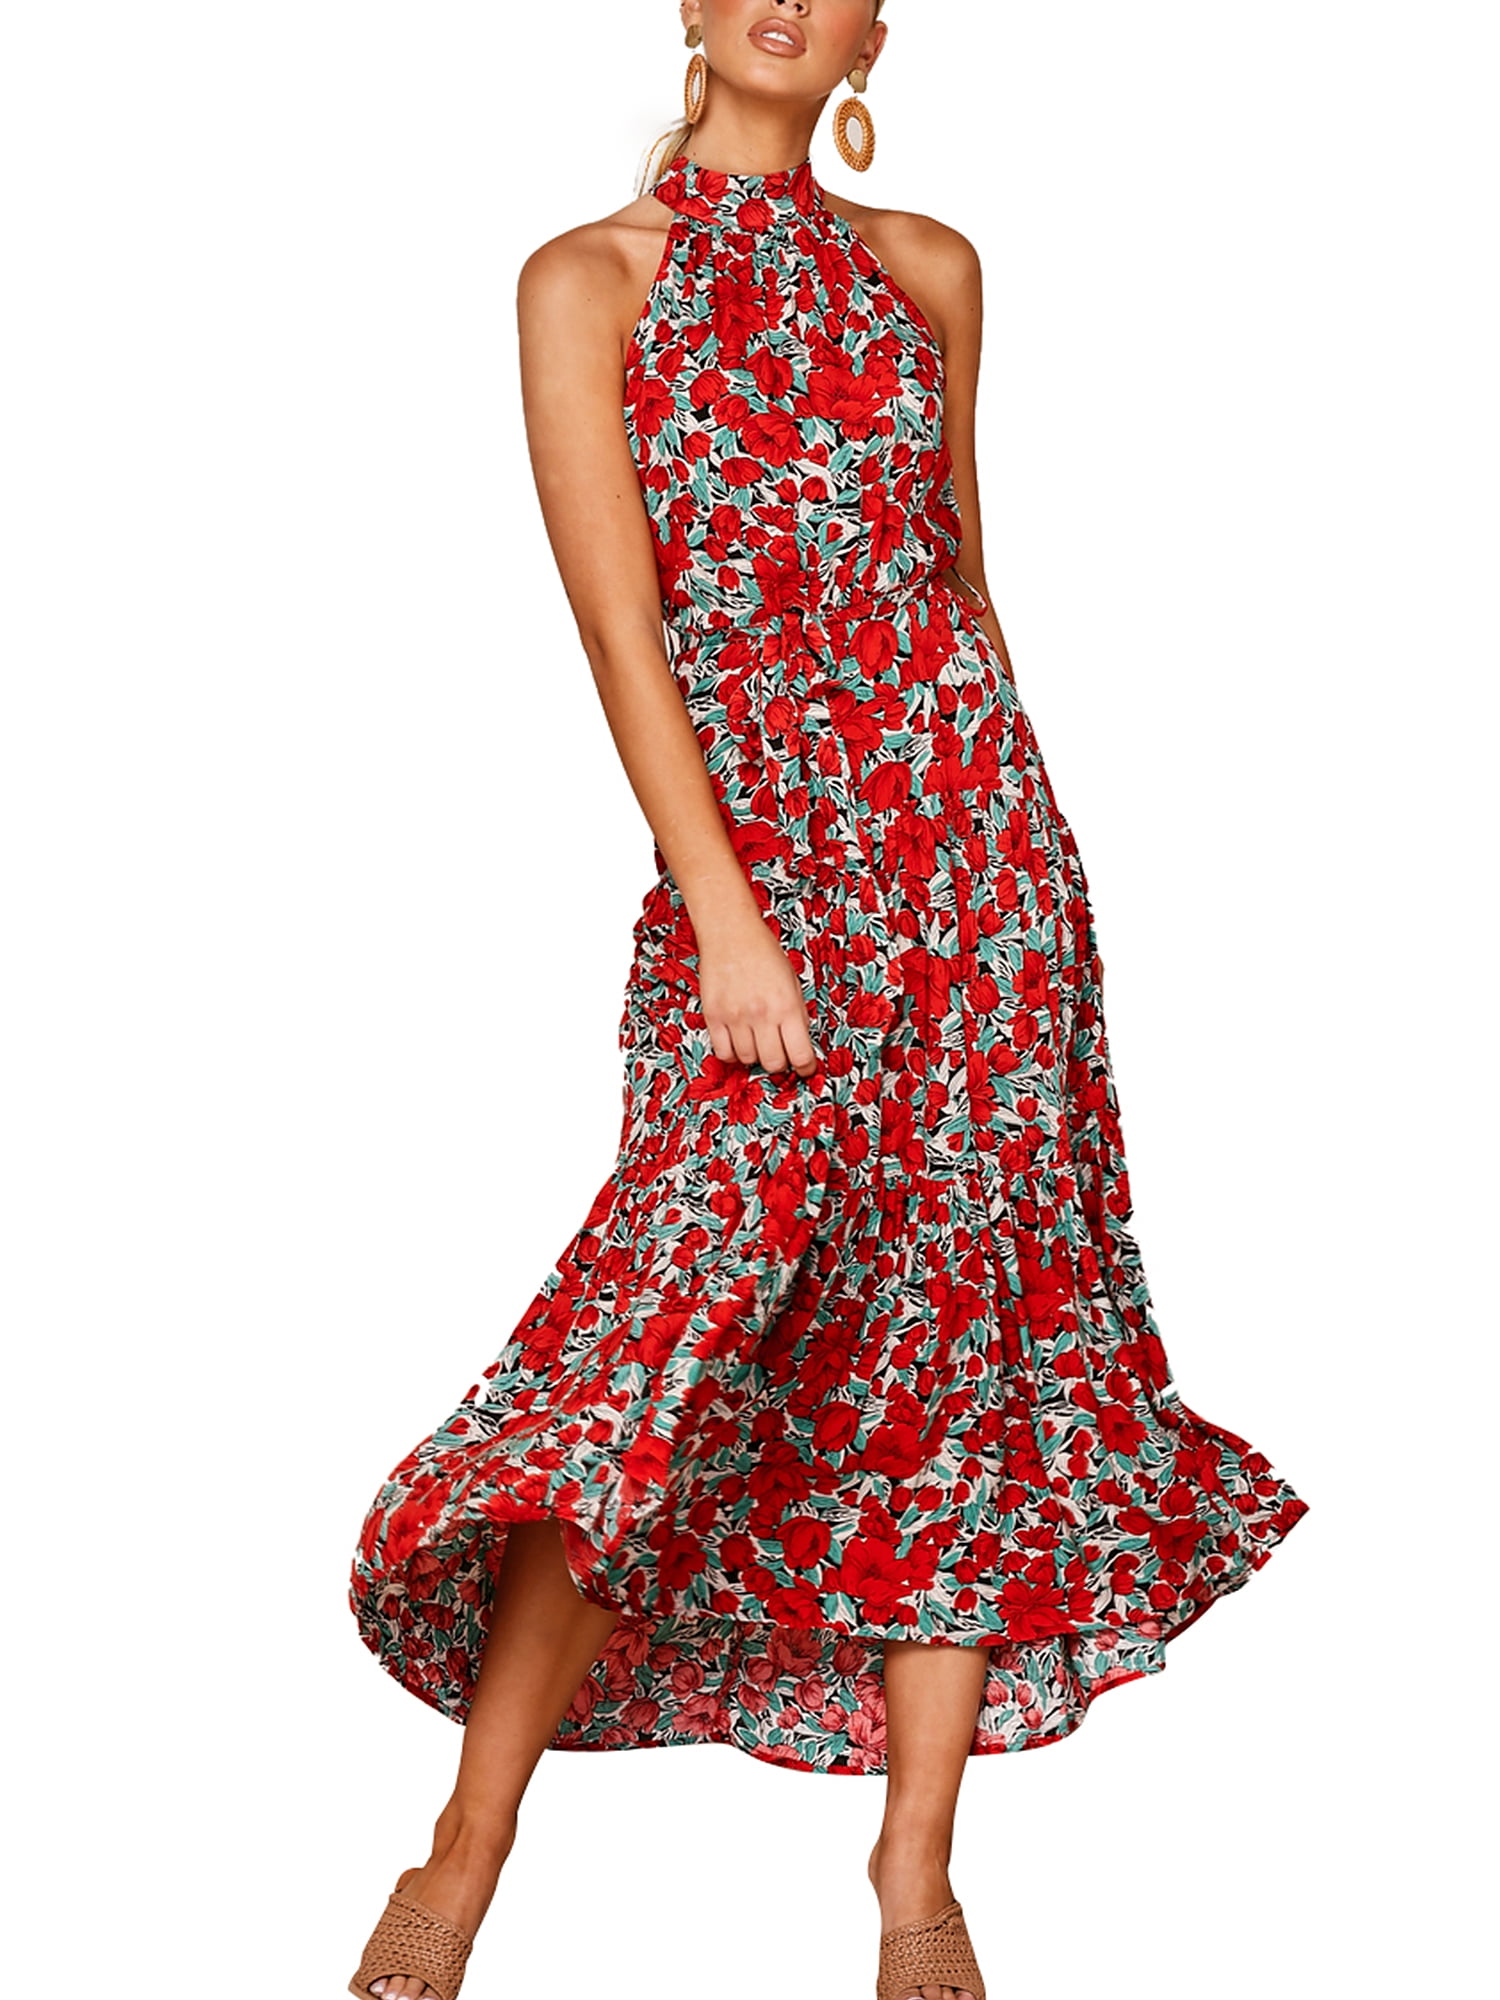 Sundresses for Women Casual Halter Neck Floral Summer Dress Sleeveless A line Swing Dress with Pockets Ulanda